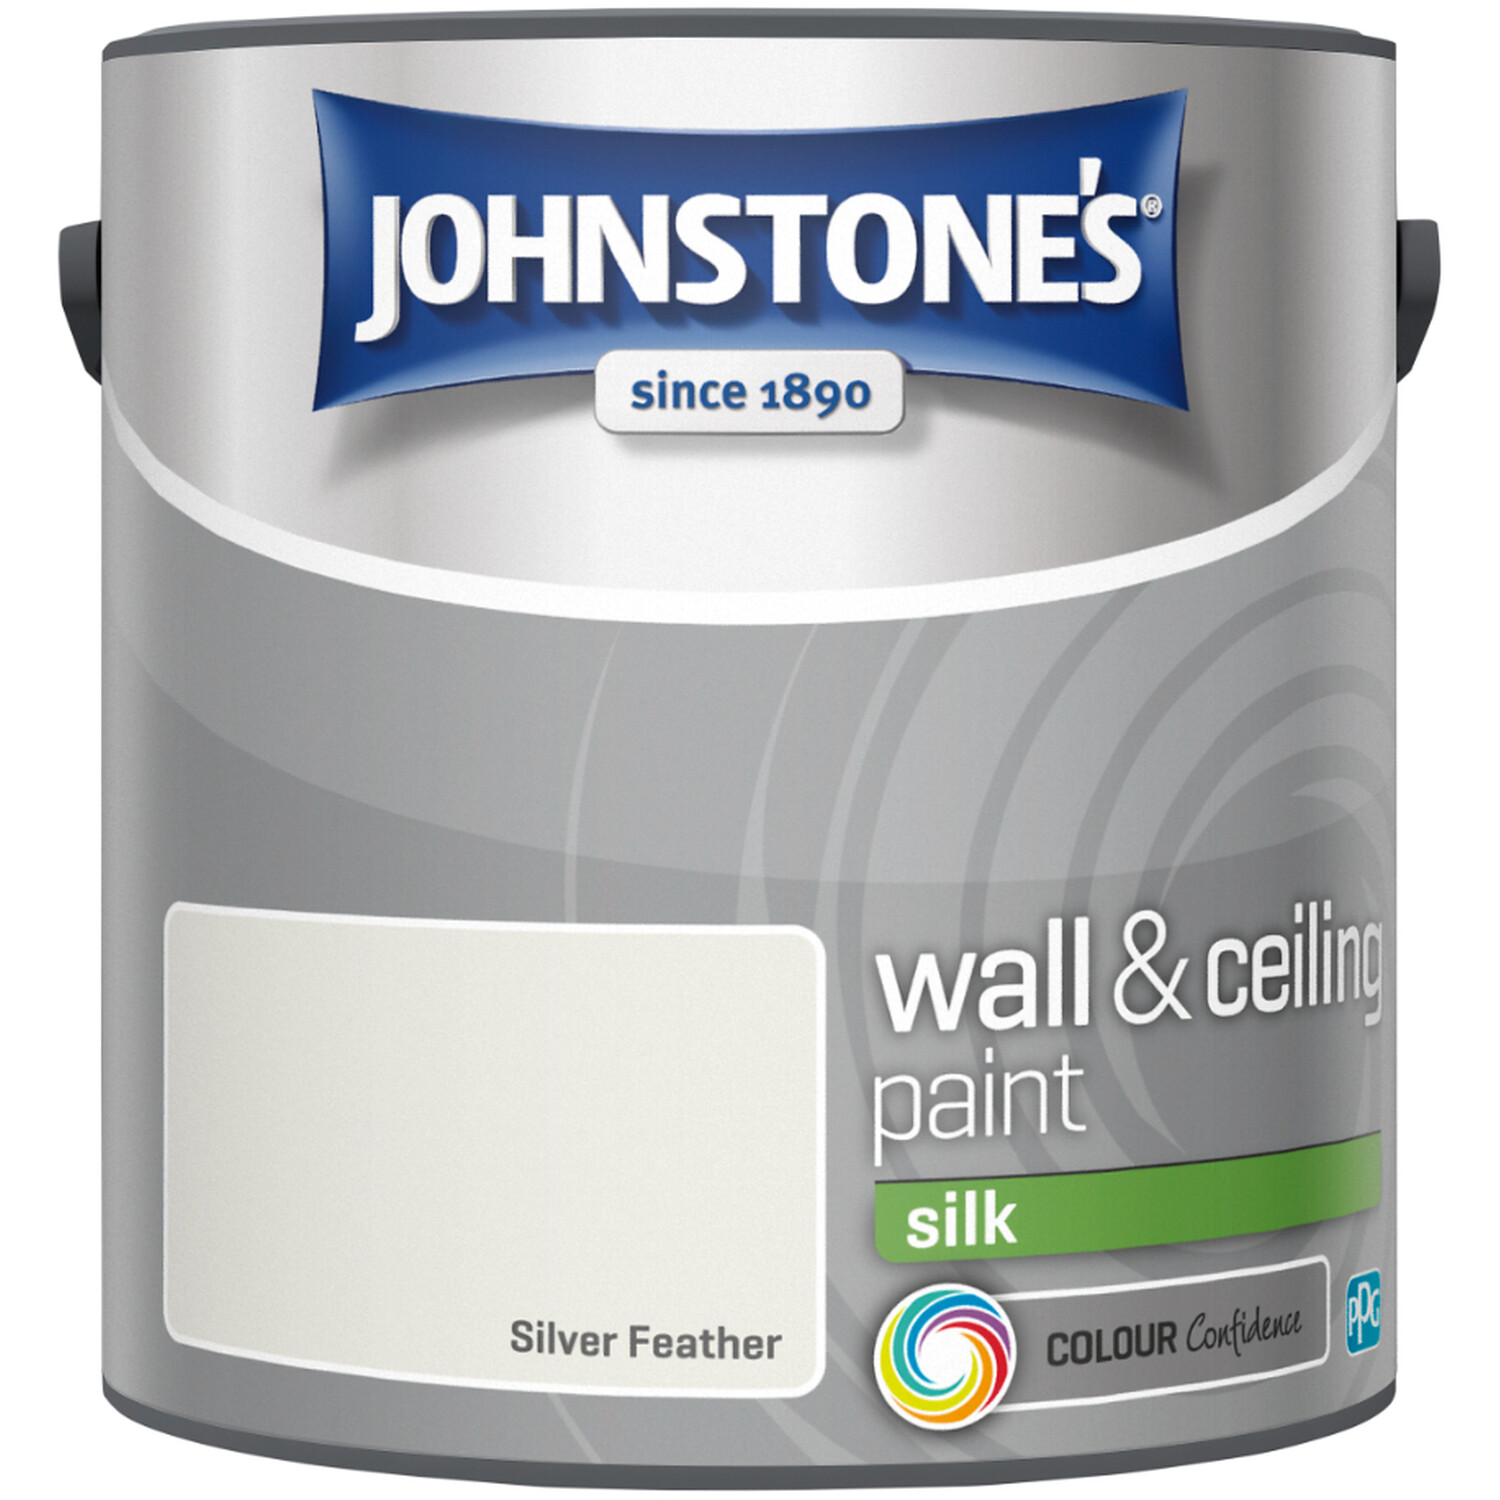 Johnstones Silk Emulsion Paint - Silver Feather Image 2